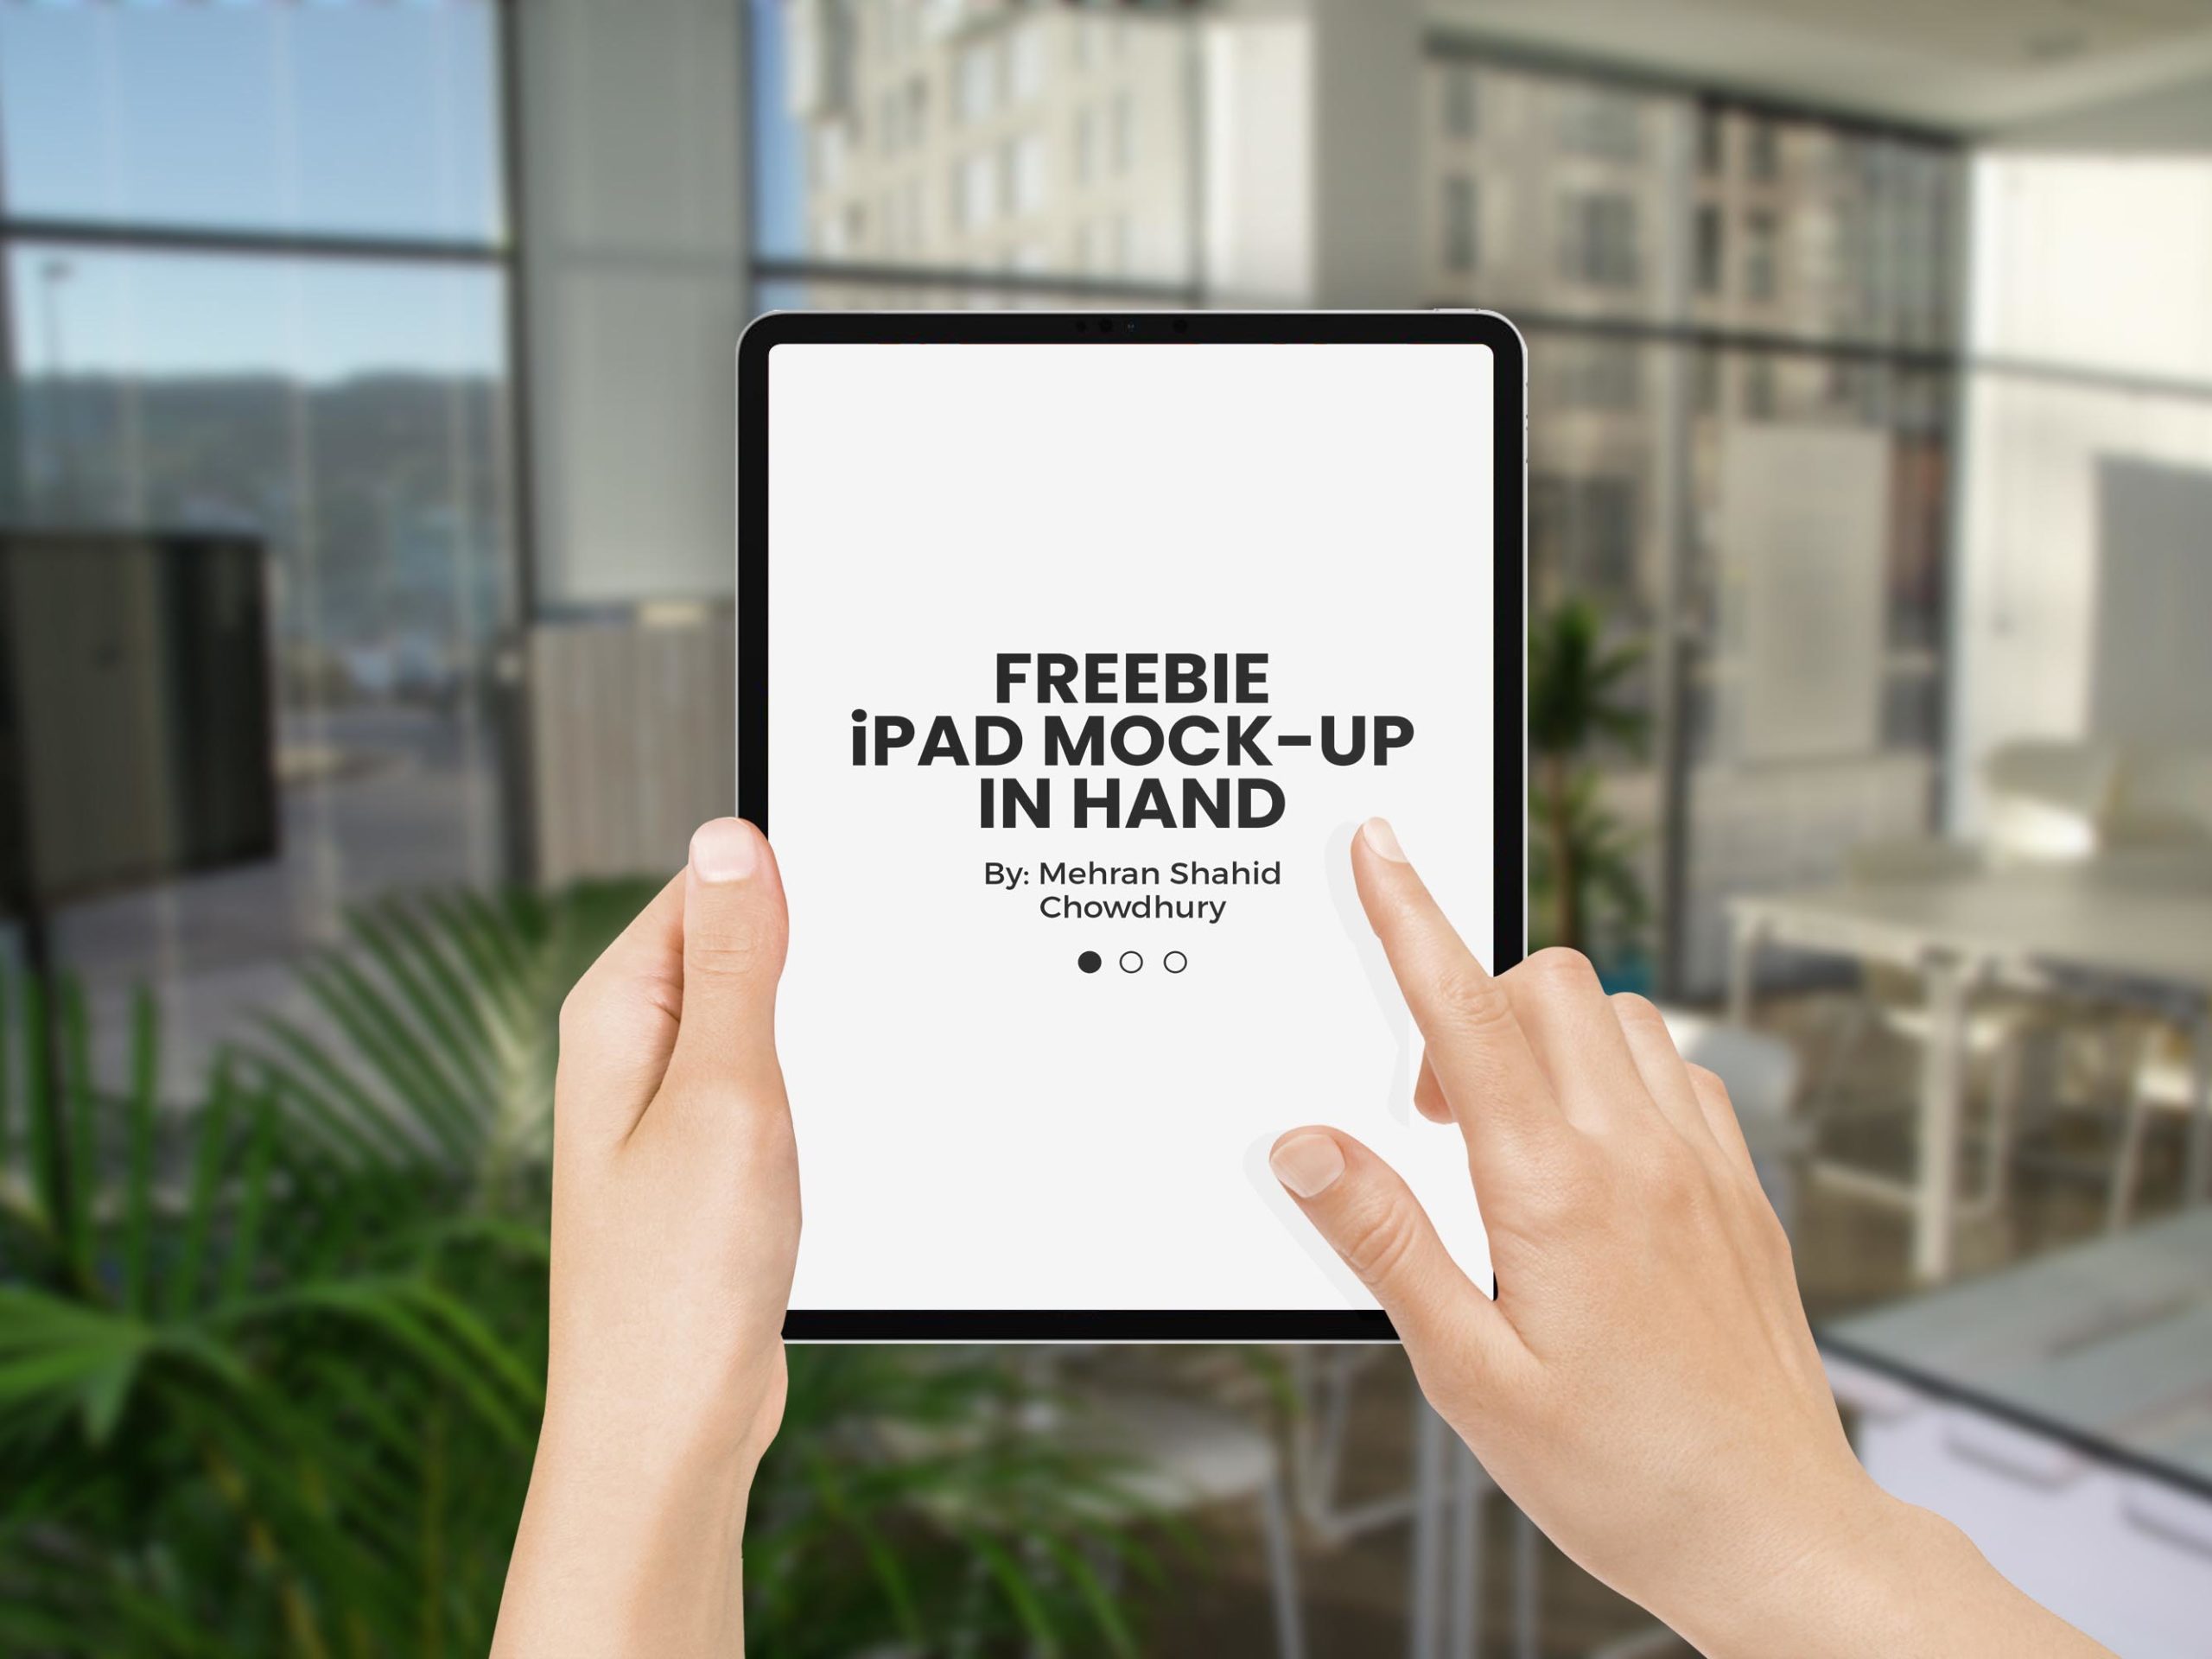 iPad Pro 2018 in Hand Mockup